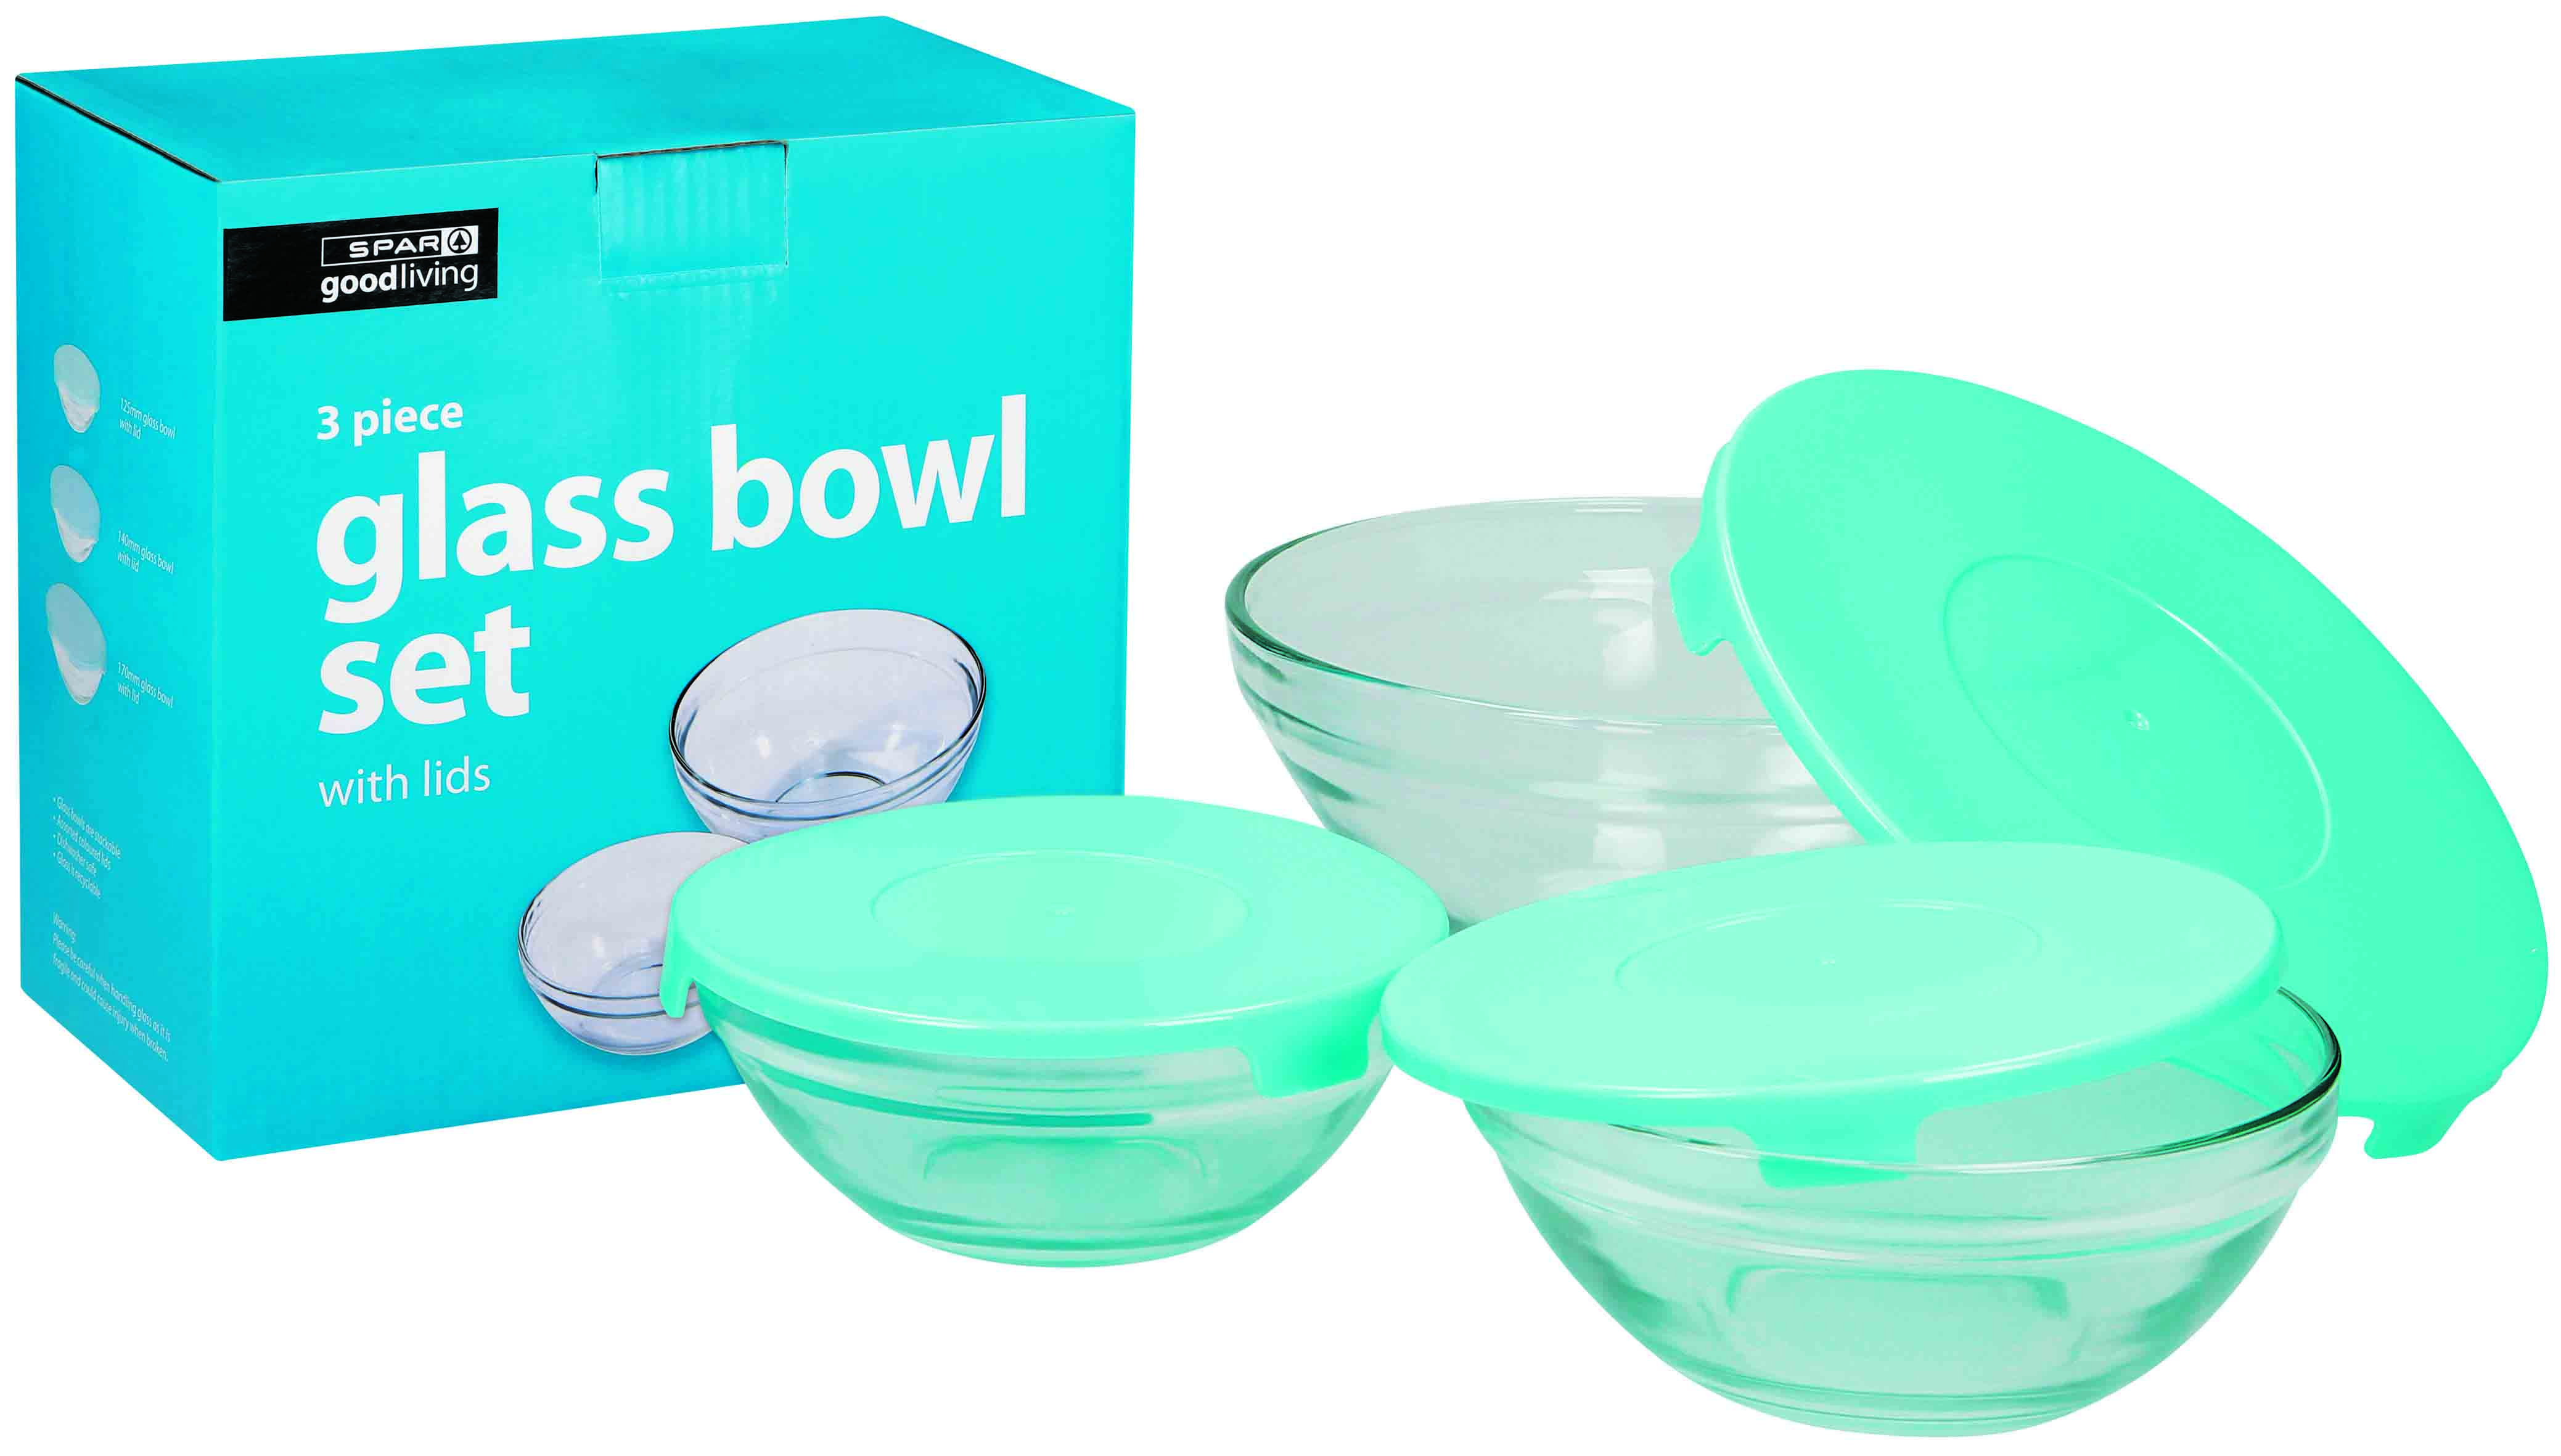 glass bowl set (with lids) - 3 piece